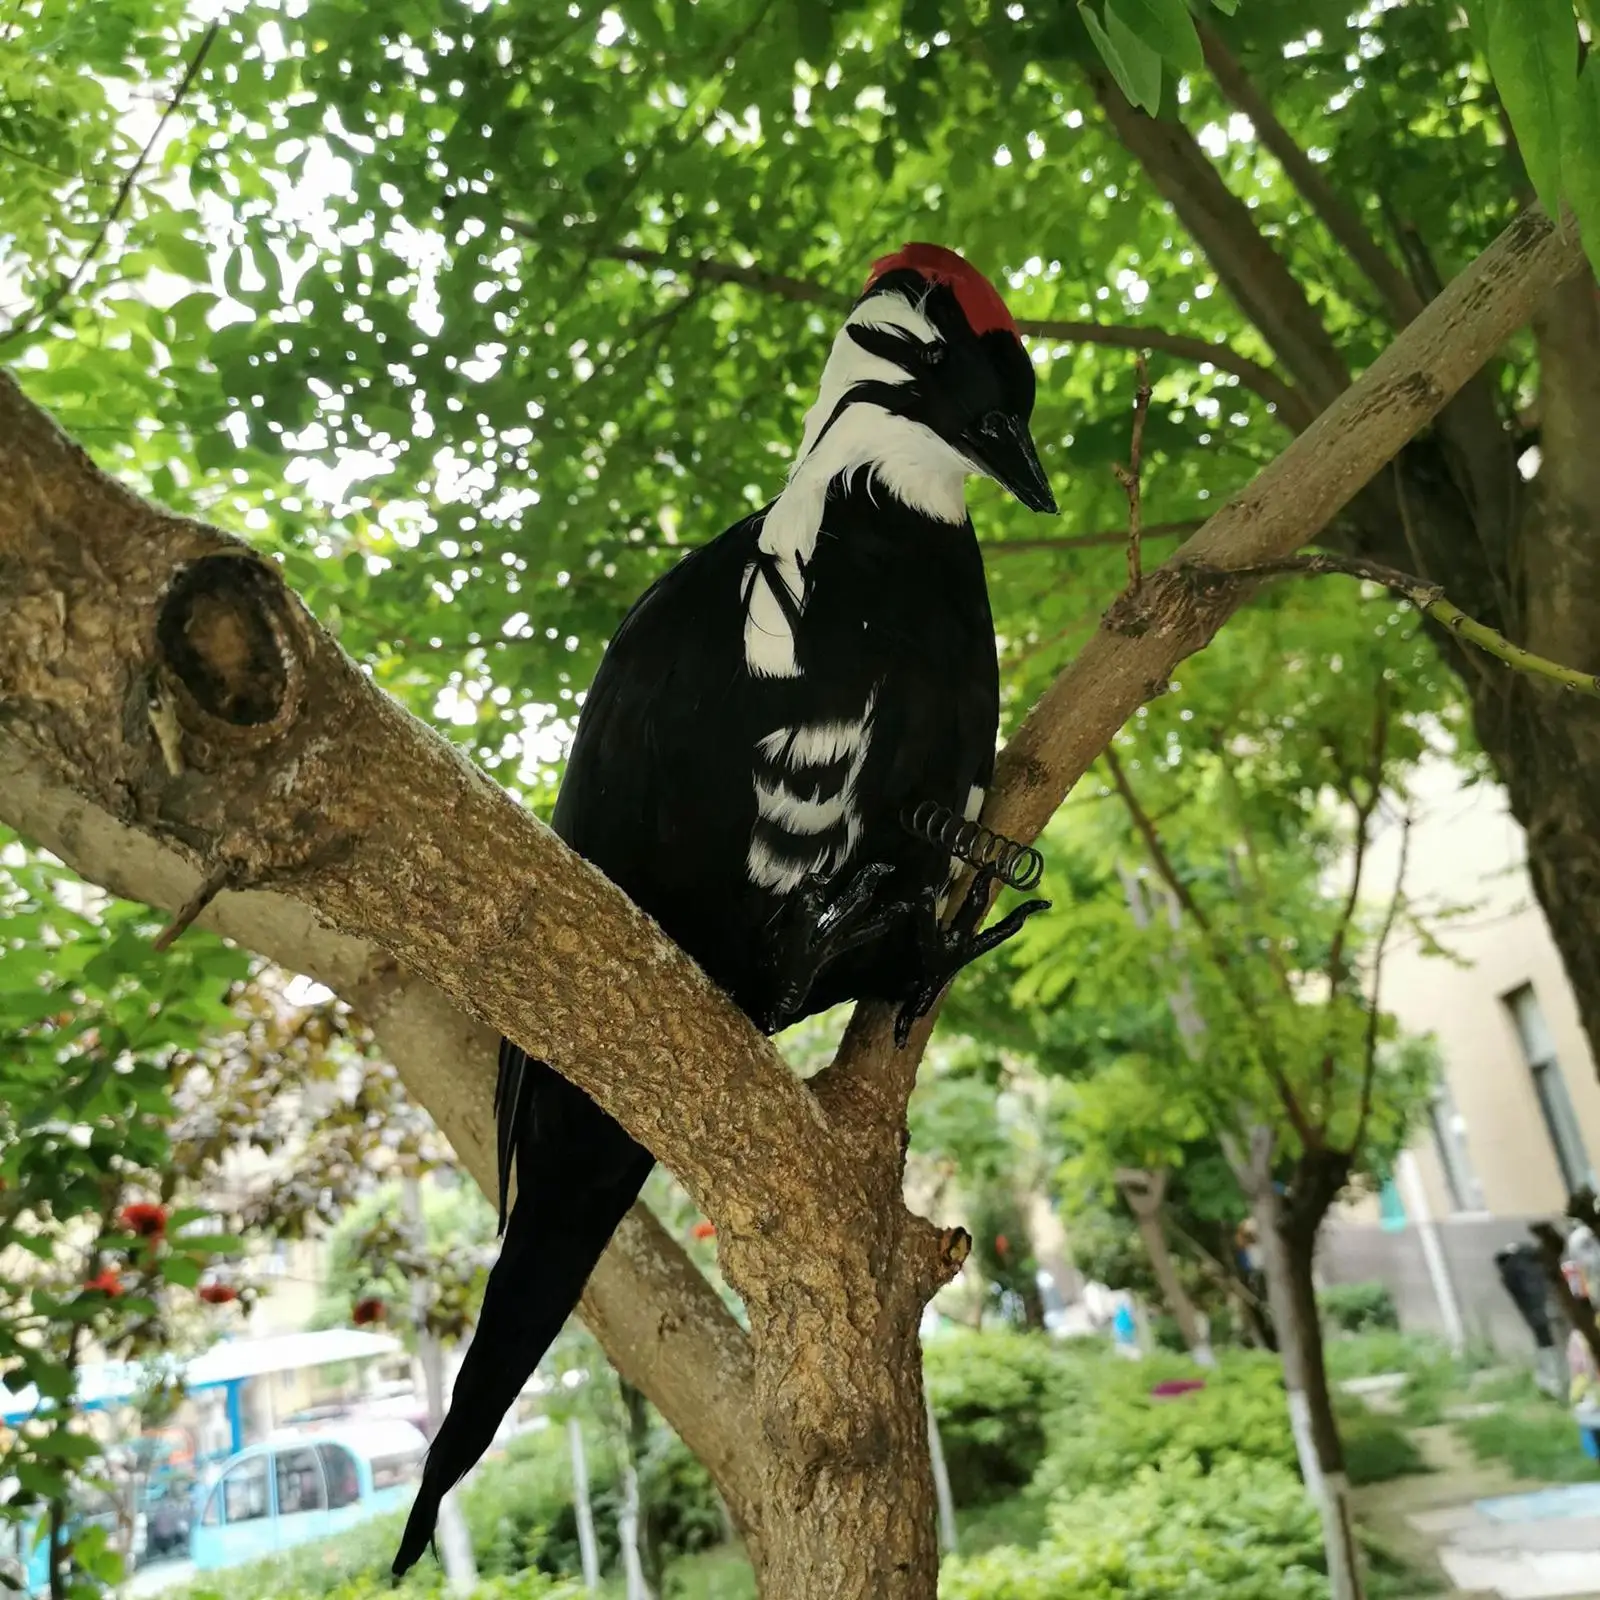 Simulation Woodpecker Bird Toys Artificial Handcrafted Art Spring Model Statue Sculpture for Home Yard Garden Decor Ornament